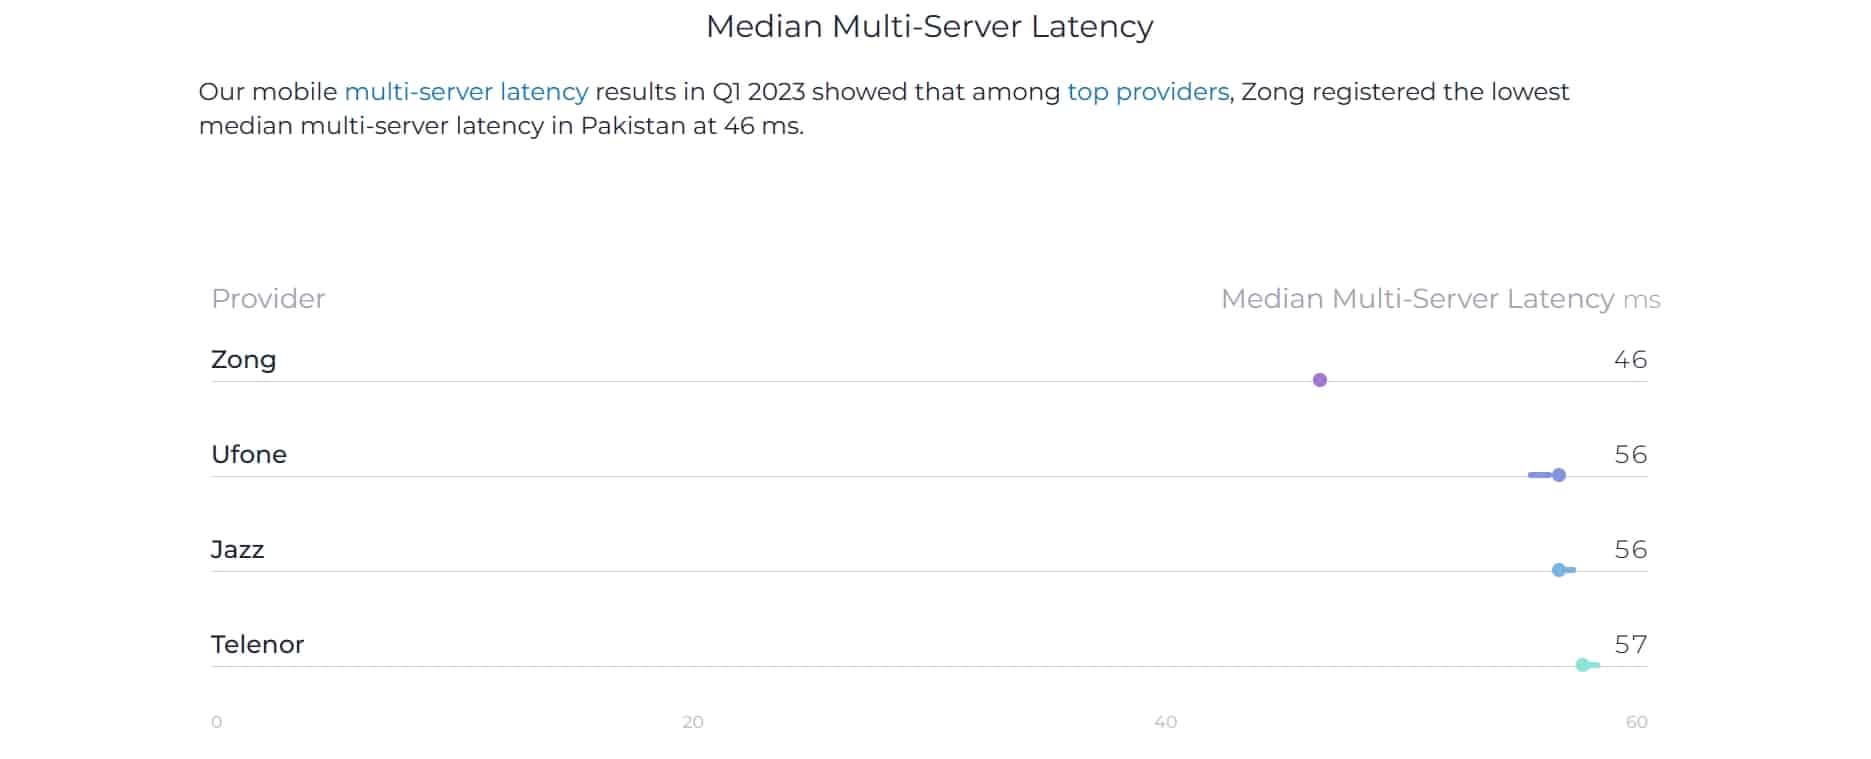 Top Mobile Internet Providers in Pakistan